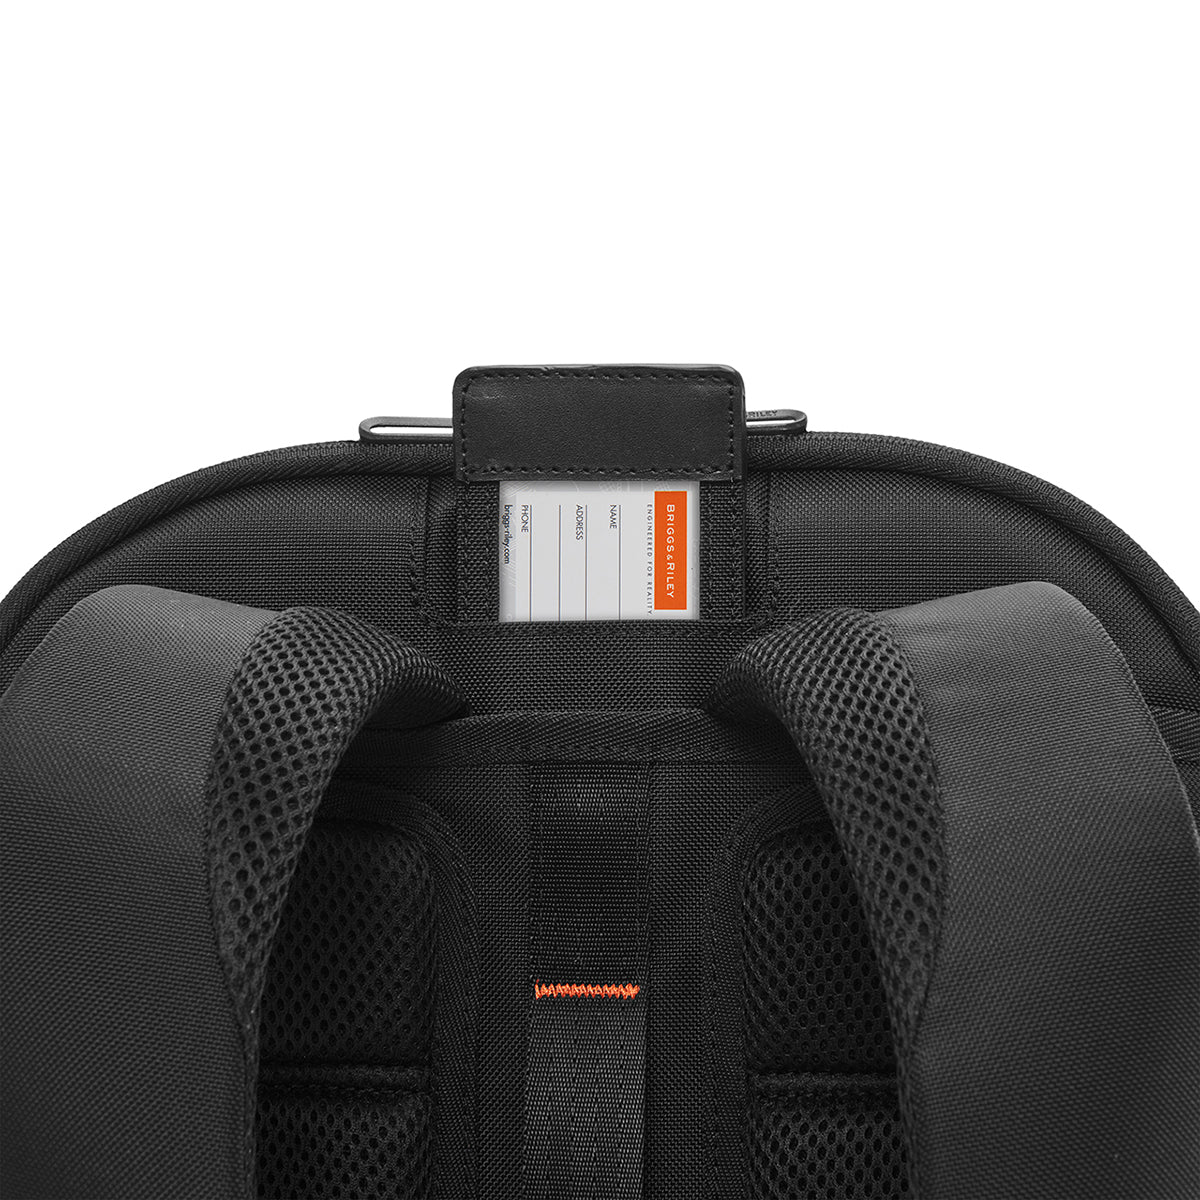 Briggs & Riley ZDX Convertible Backpack Duffle Bag